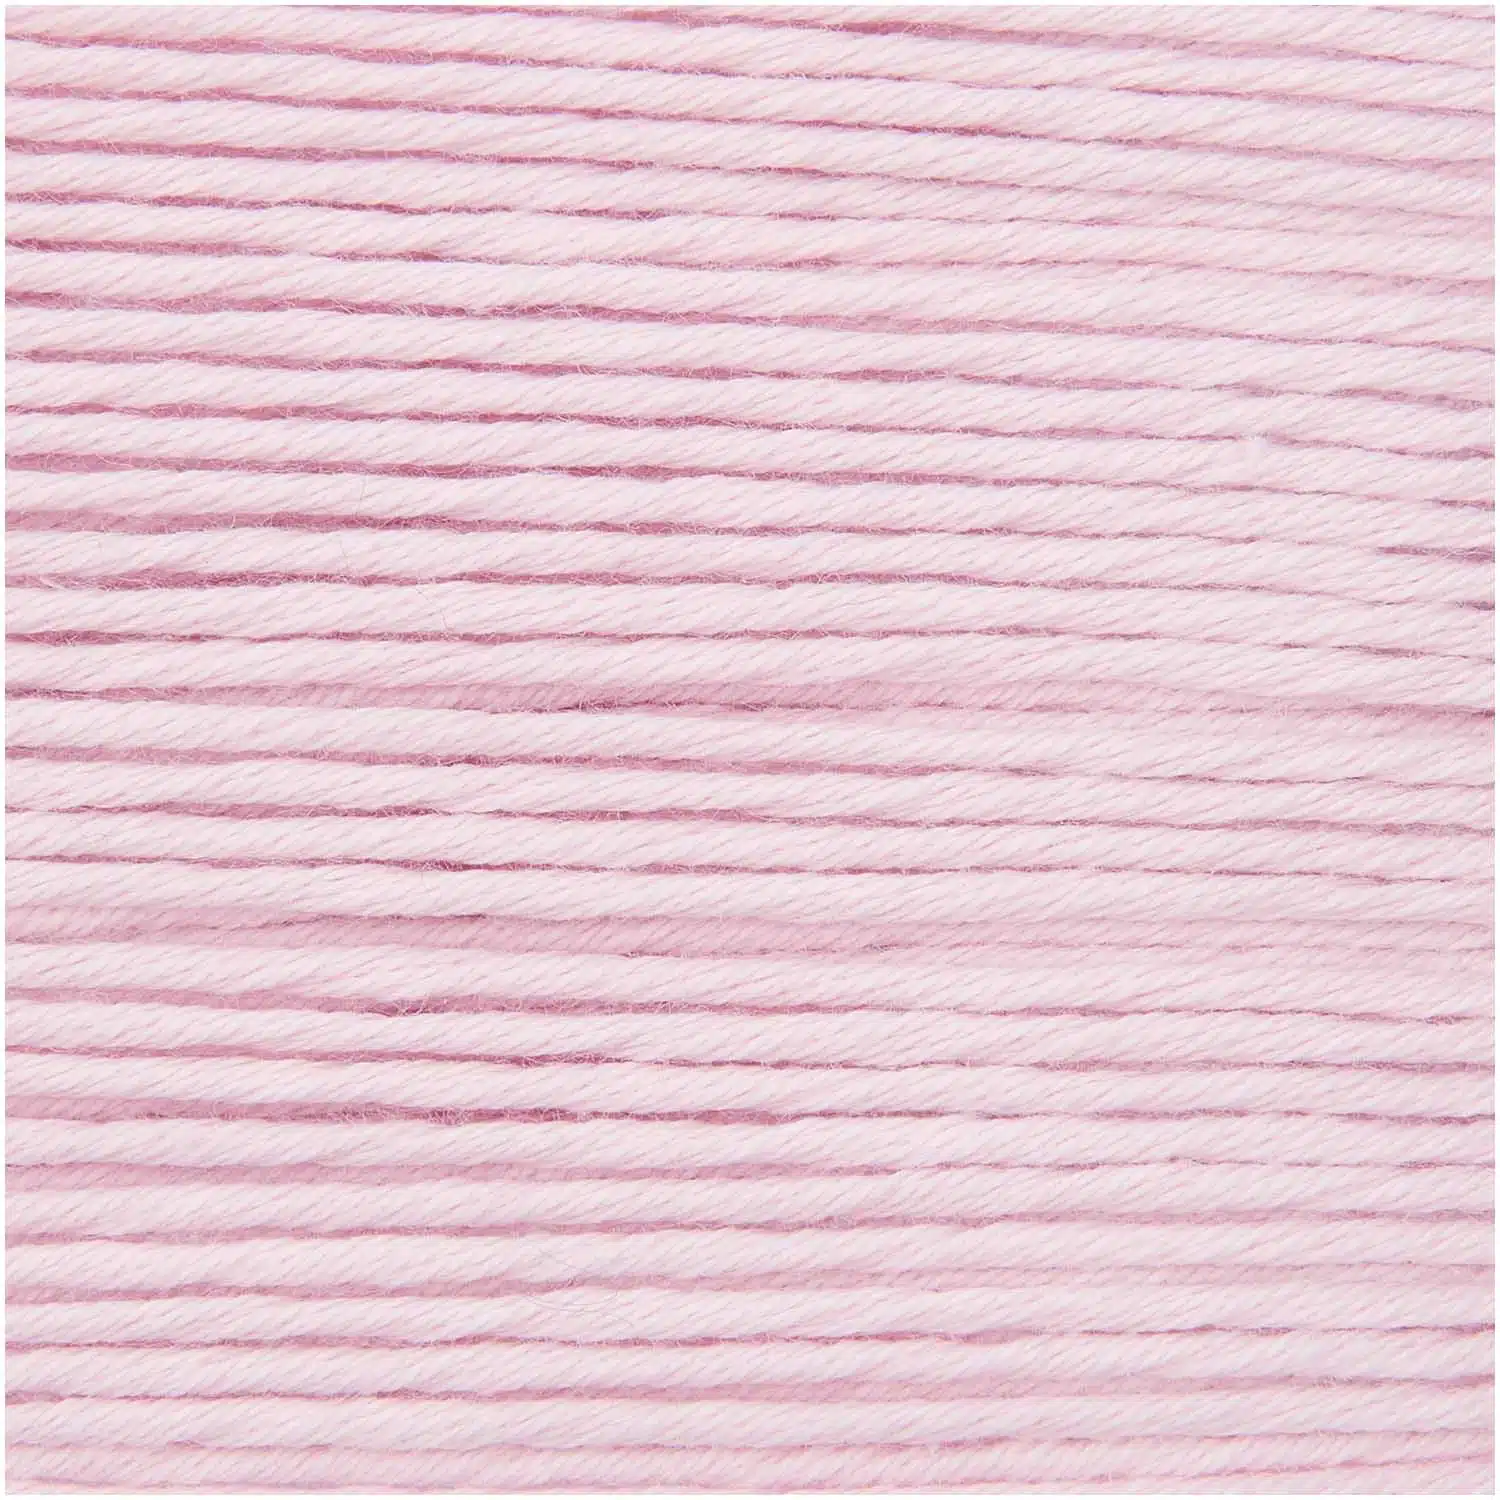 Rico Essentials Soft Merino Aran - Blossom Pink 069